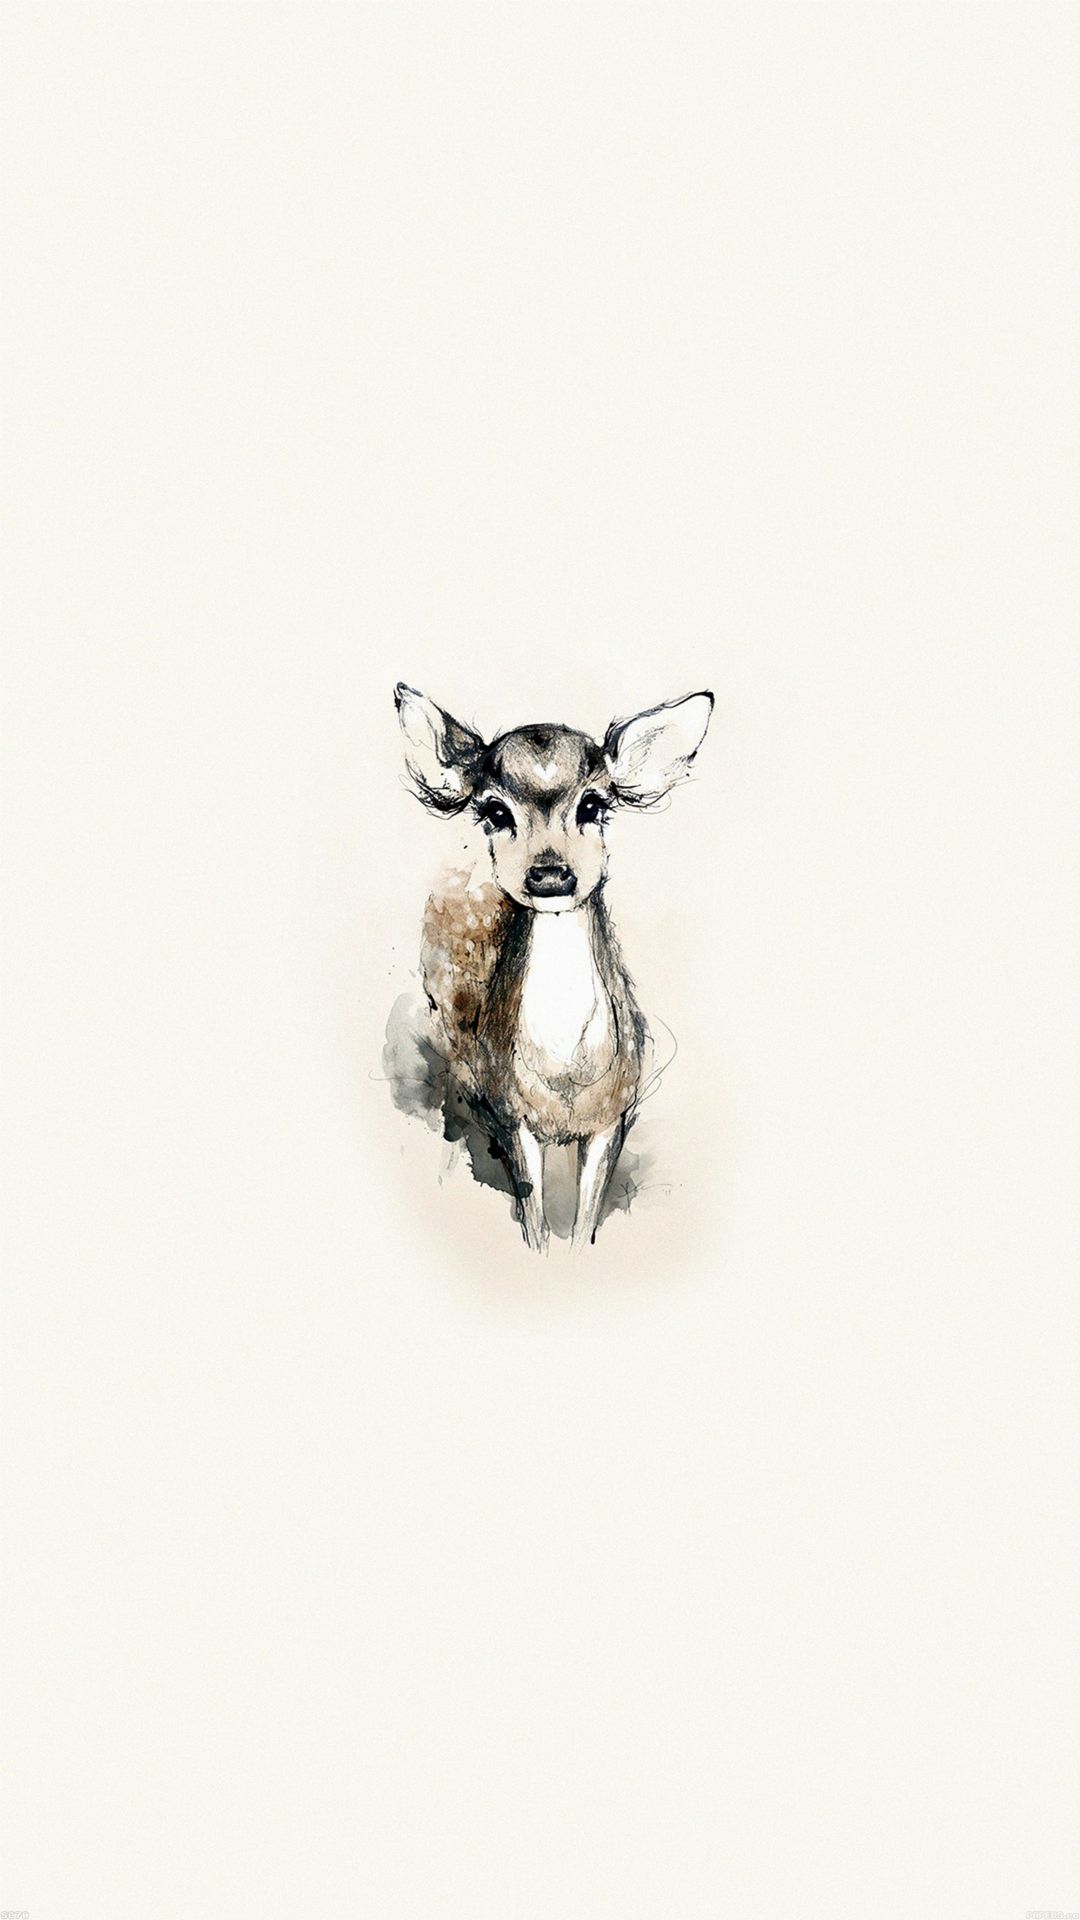 Tiny Deer Illustration IPhone 6 Wallpaper Download. IPhone Wallpaper, IPad Wallpaper One Stop Download. Deer Illustration, Deer Wallpaper, IPhone 6 Wallpaper